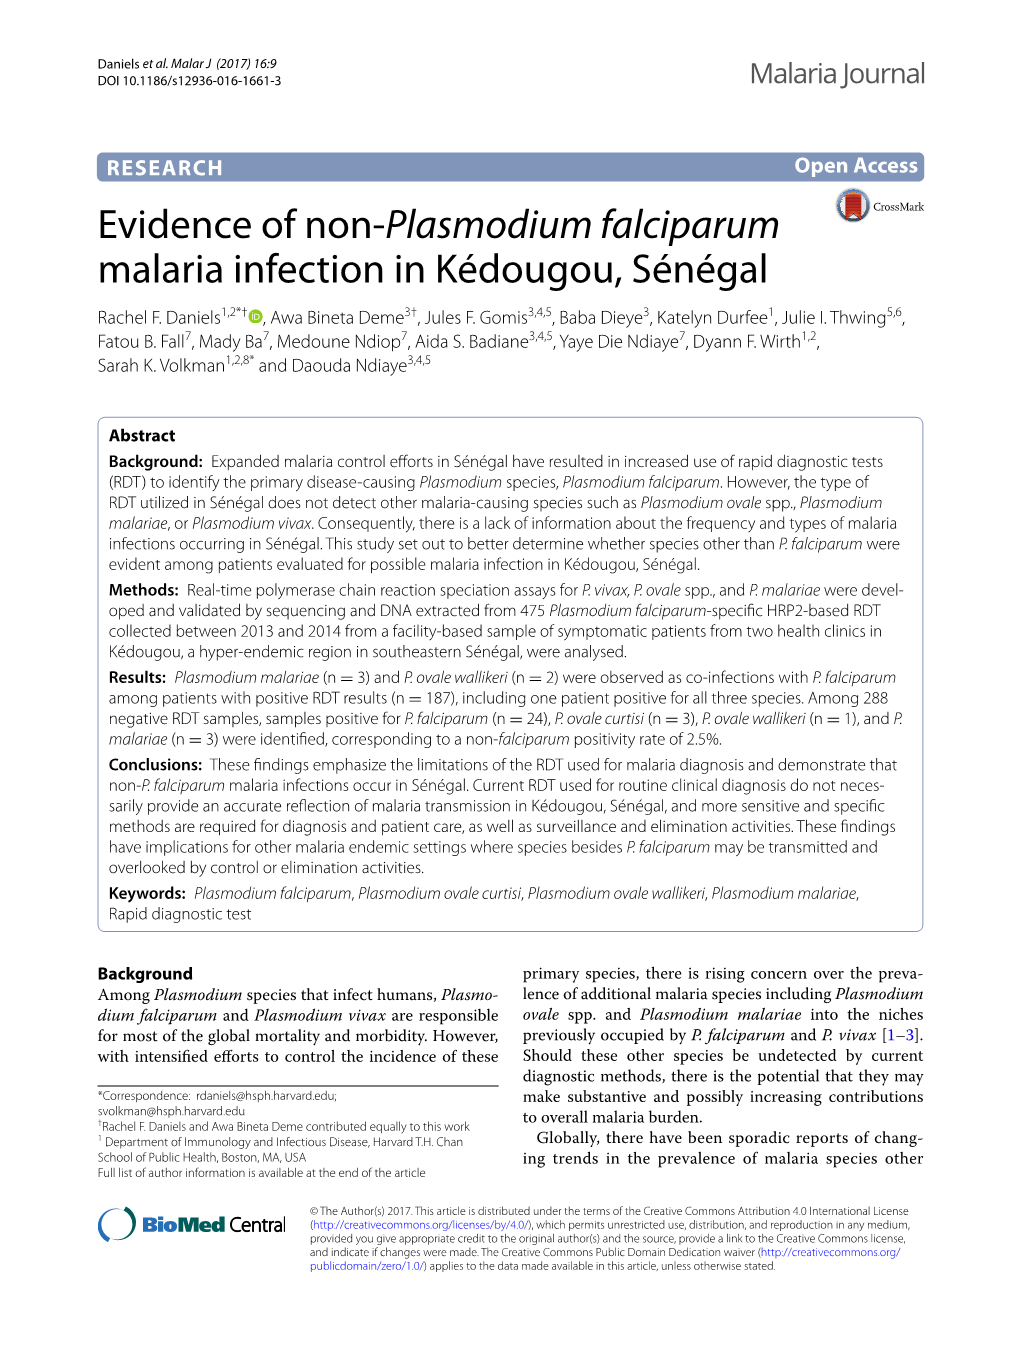 Evidence of Non-Plasmodium Falciparum Malaria Infection in Kédougou, Sénégal